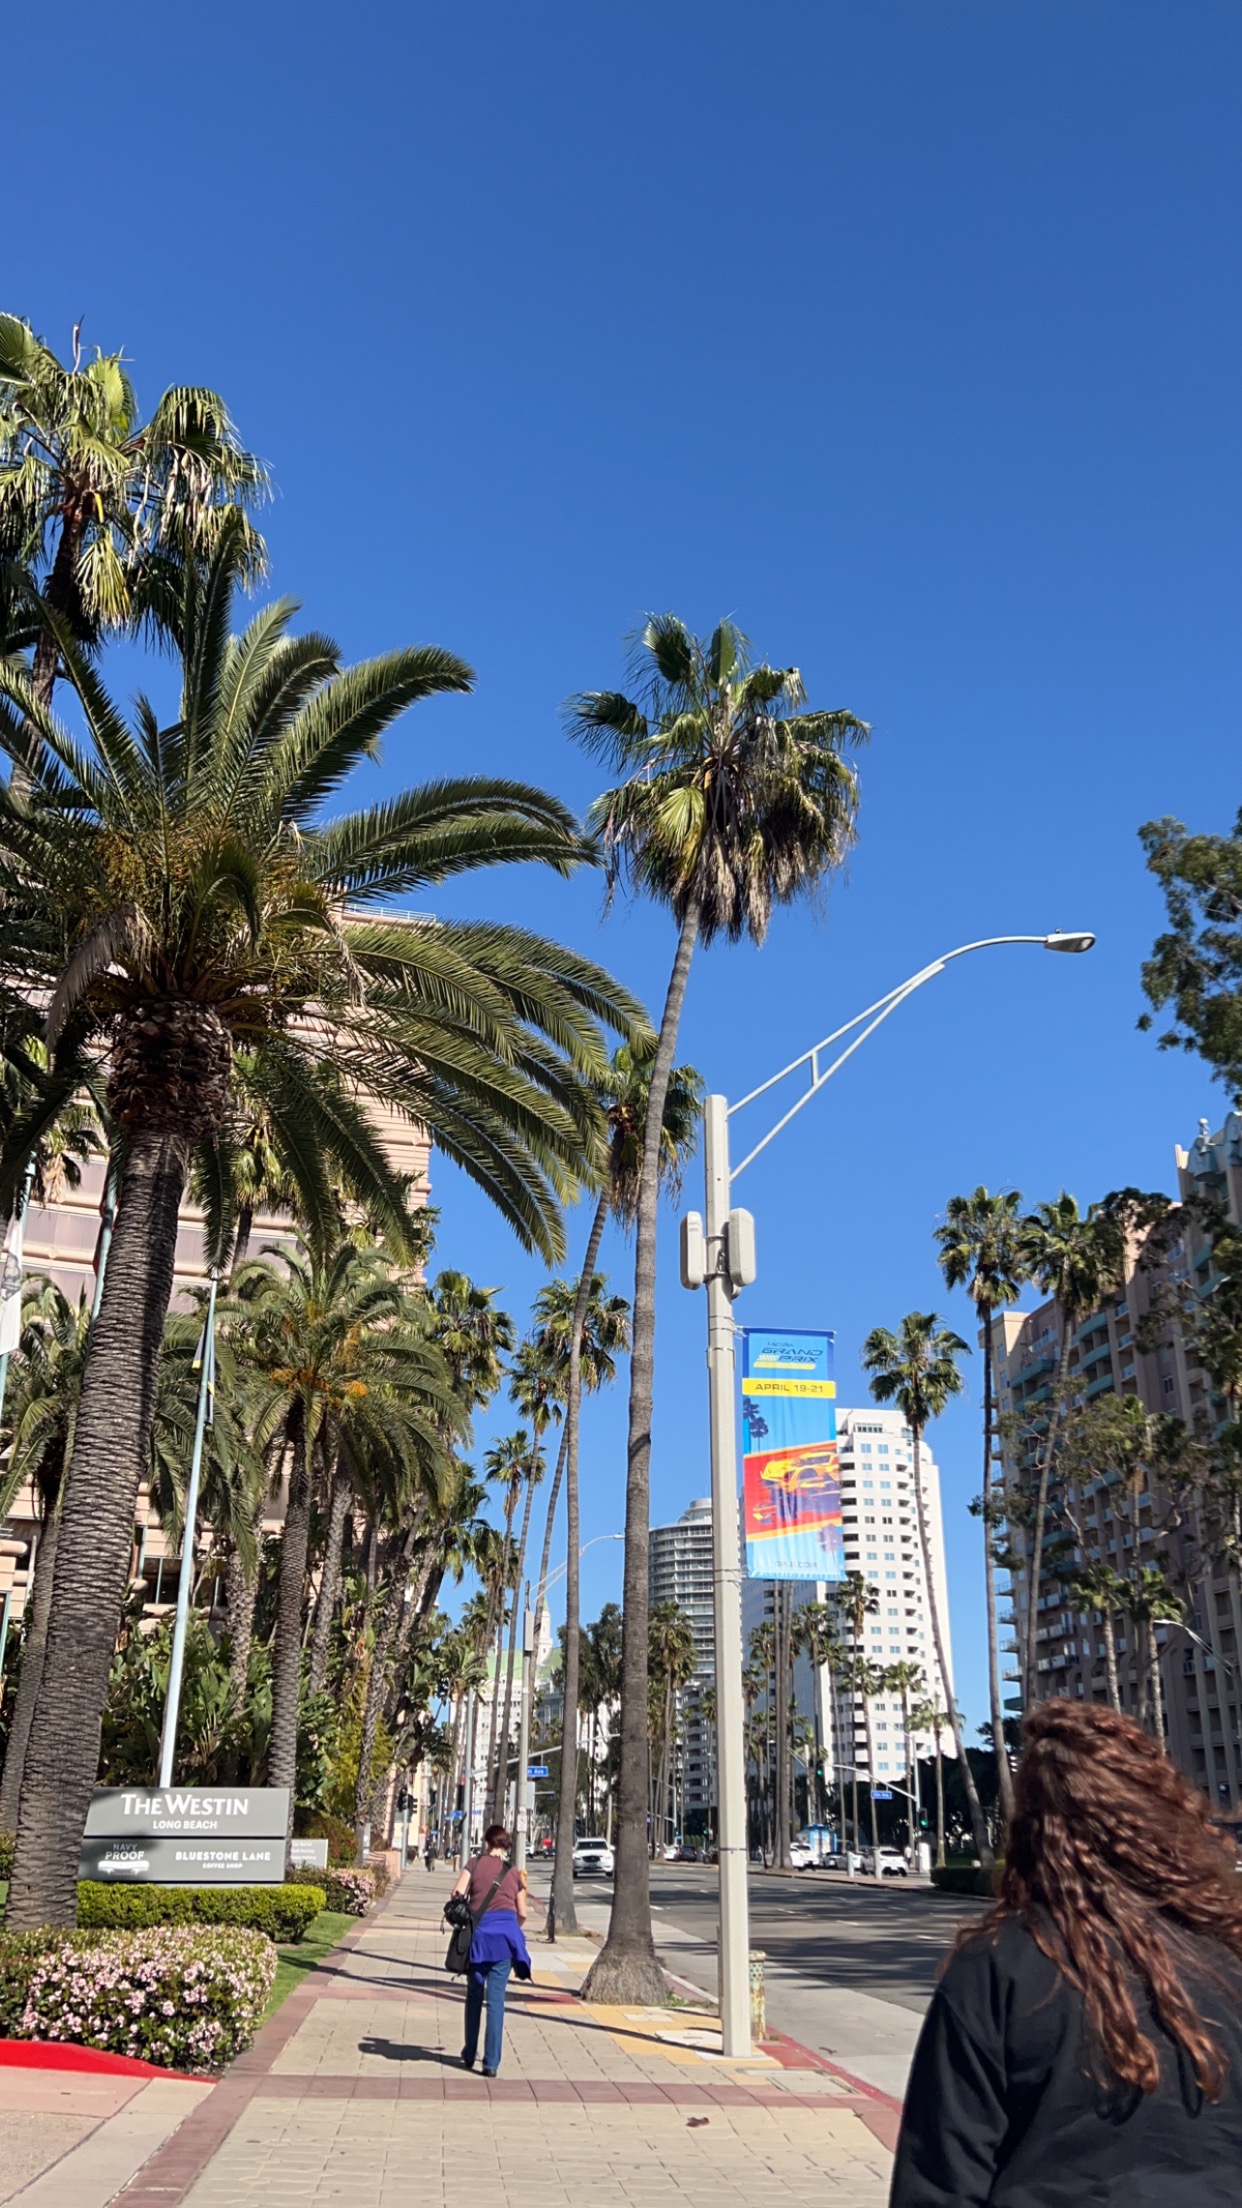 Several people walking on a sidewalk under palm trees